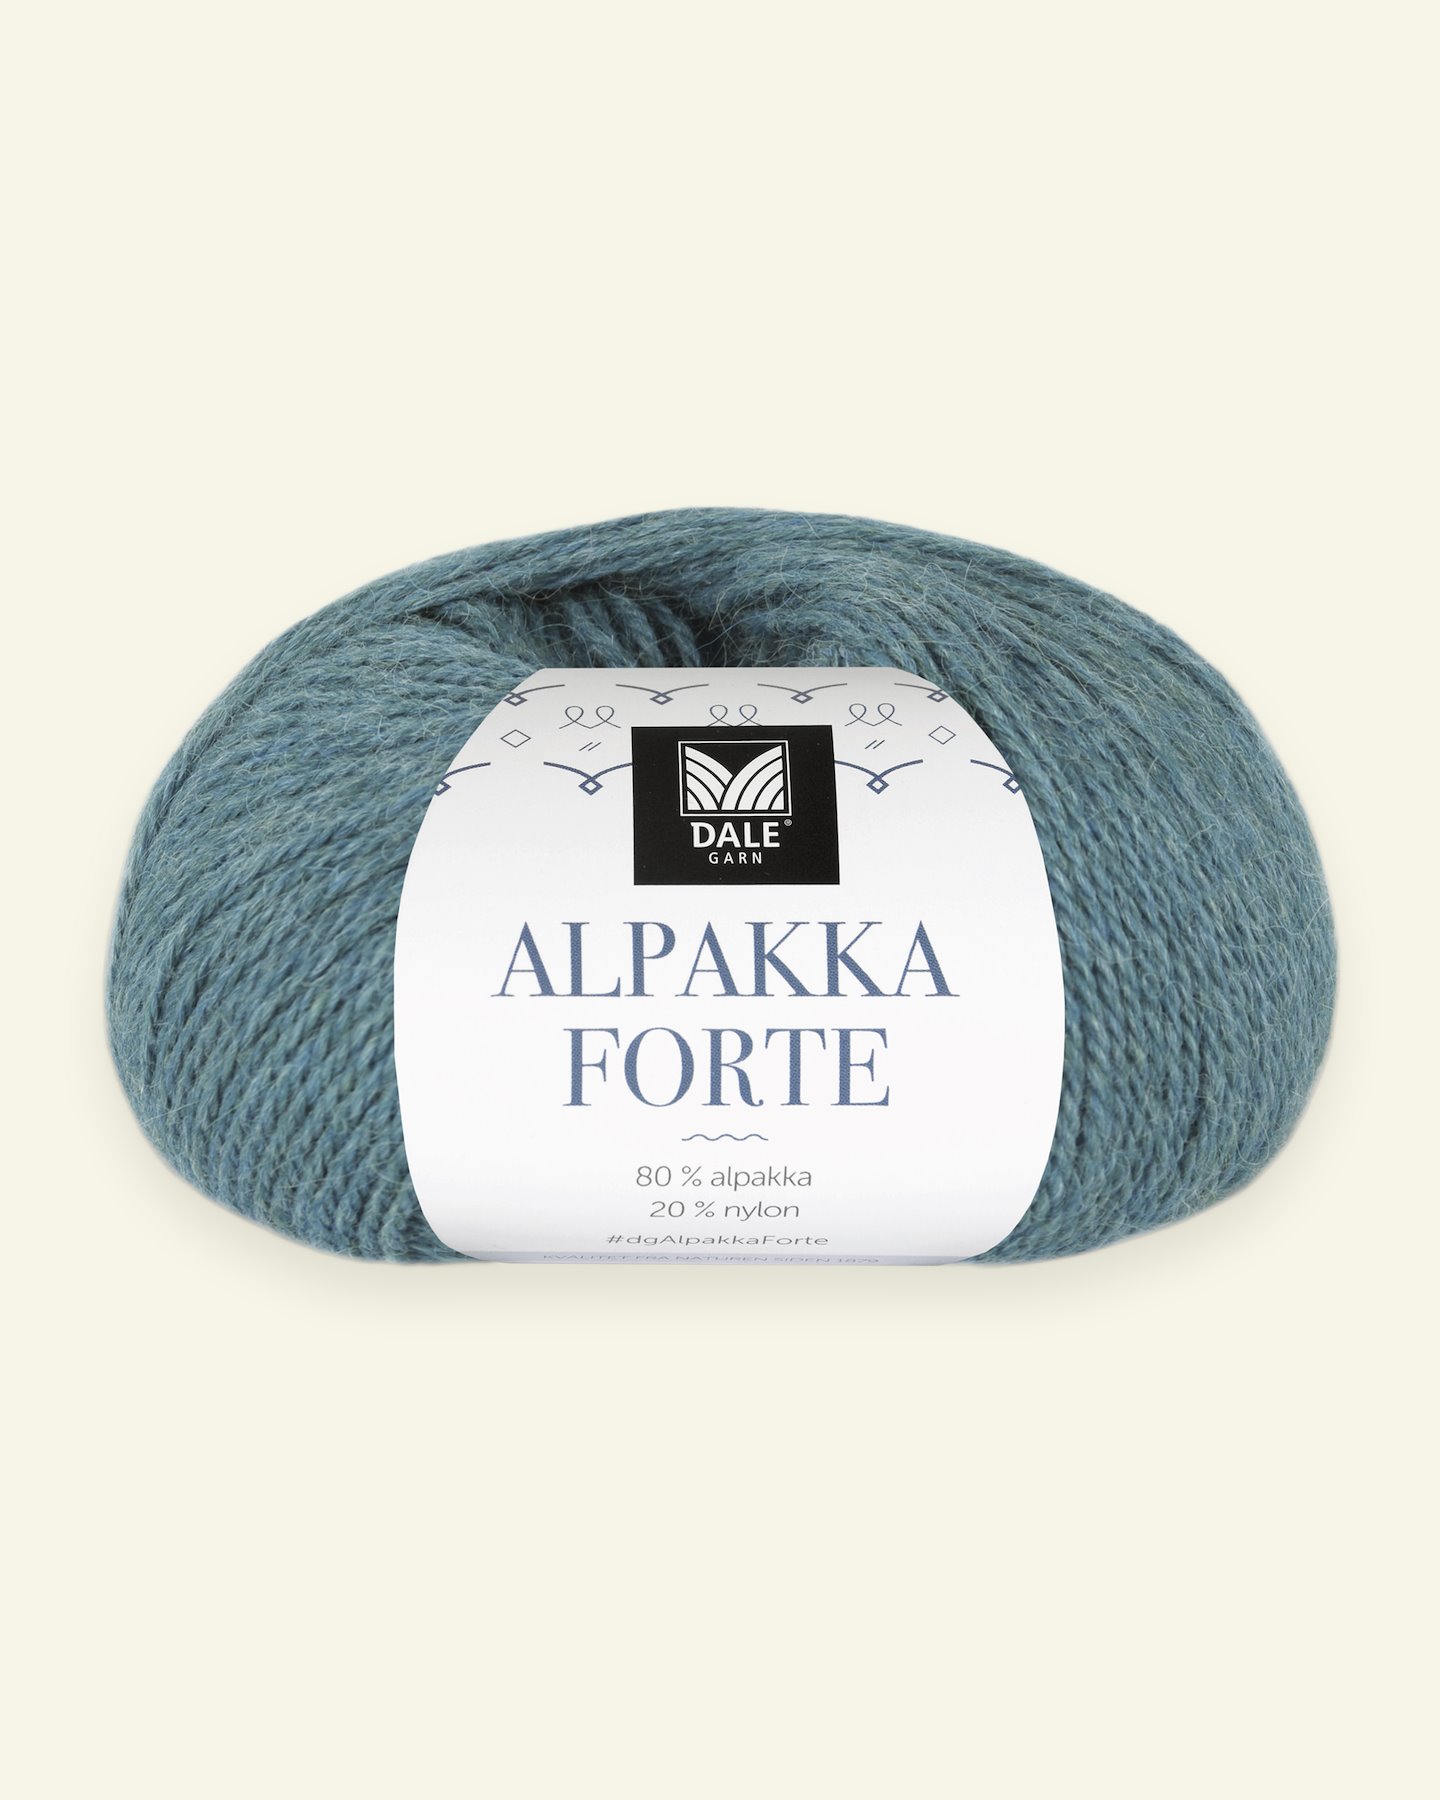 Dale Garn, Alpakawolle "Alpakka Forte", dunkel aqua mel. (730) 90000456_pack